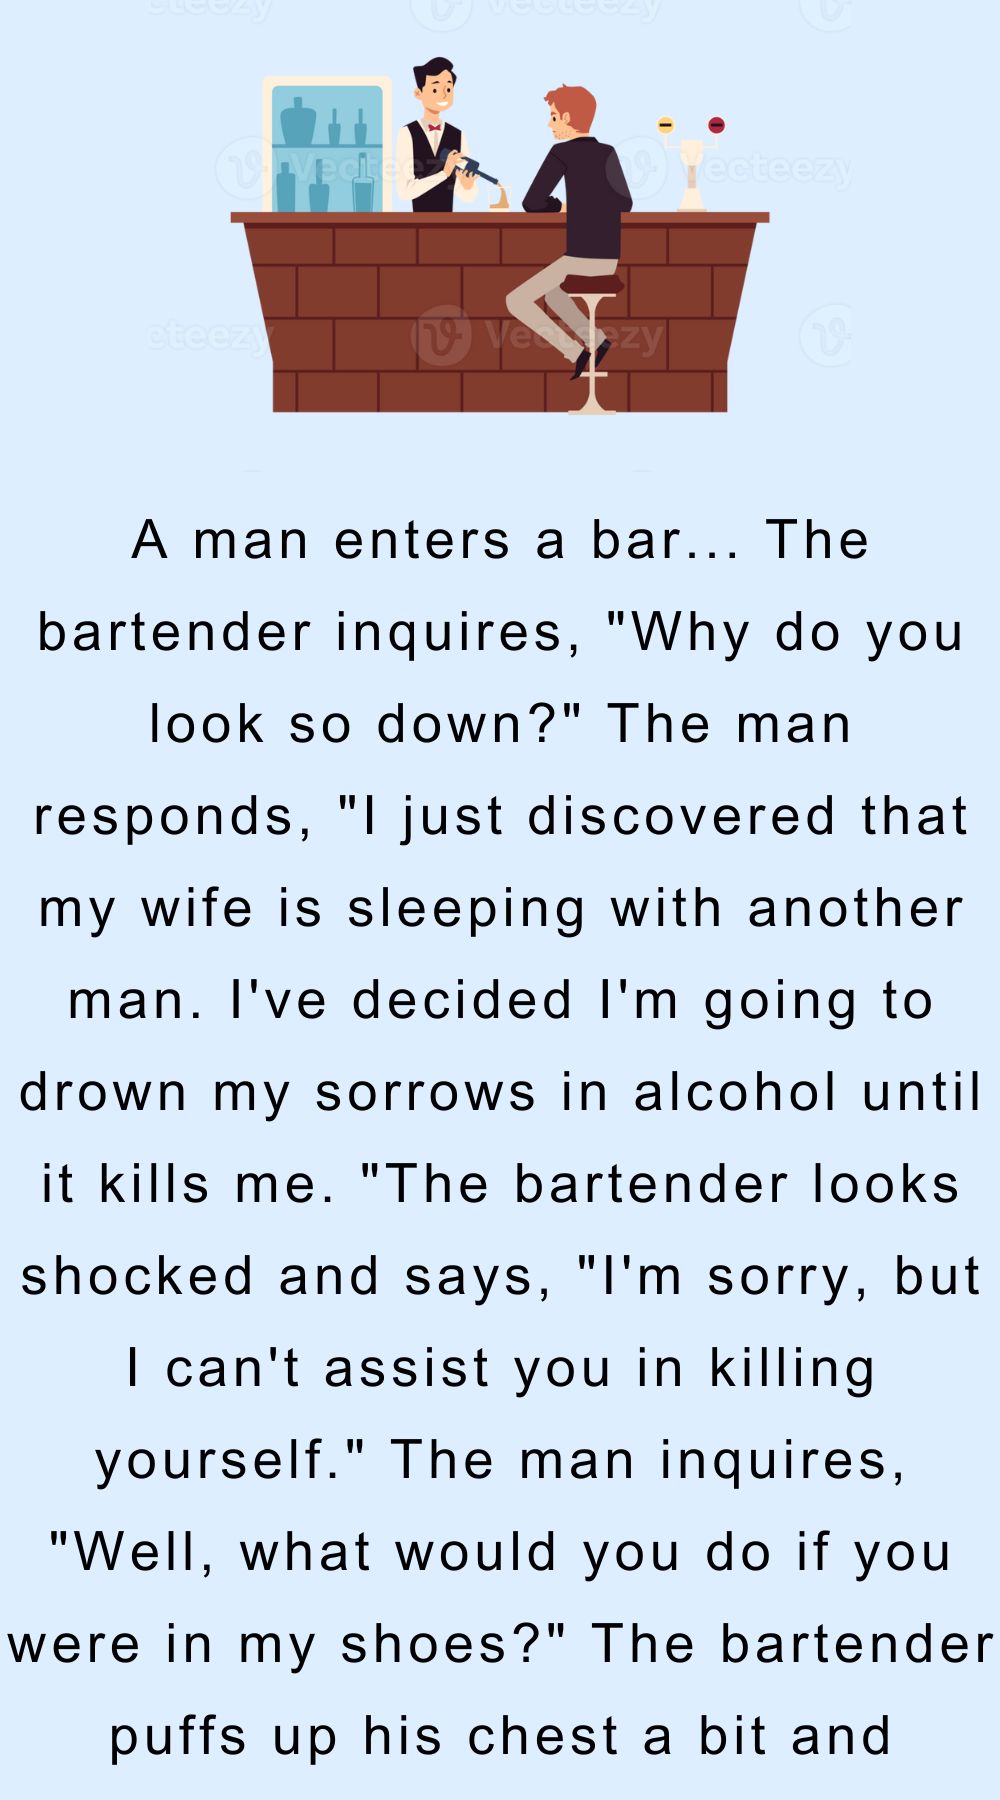 A man enters a bar